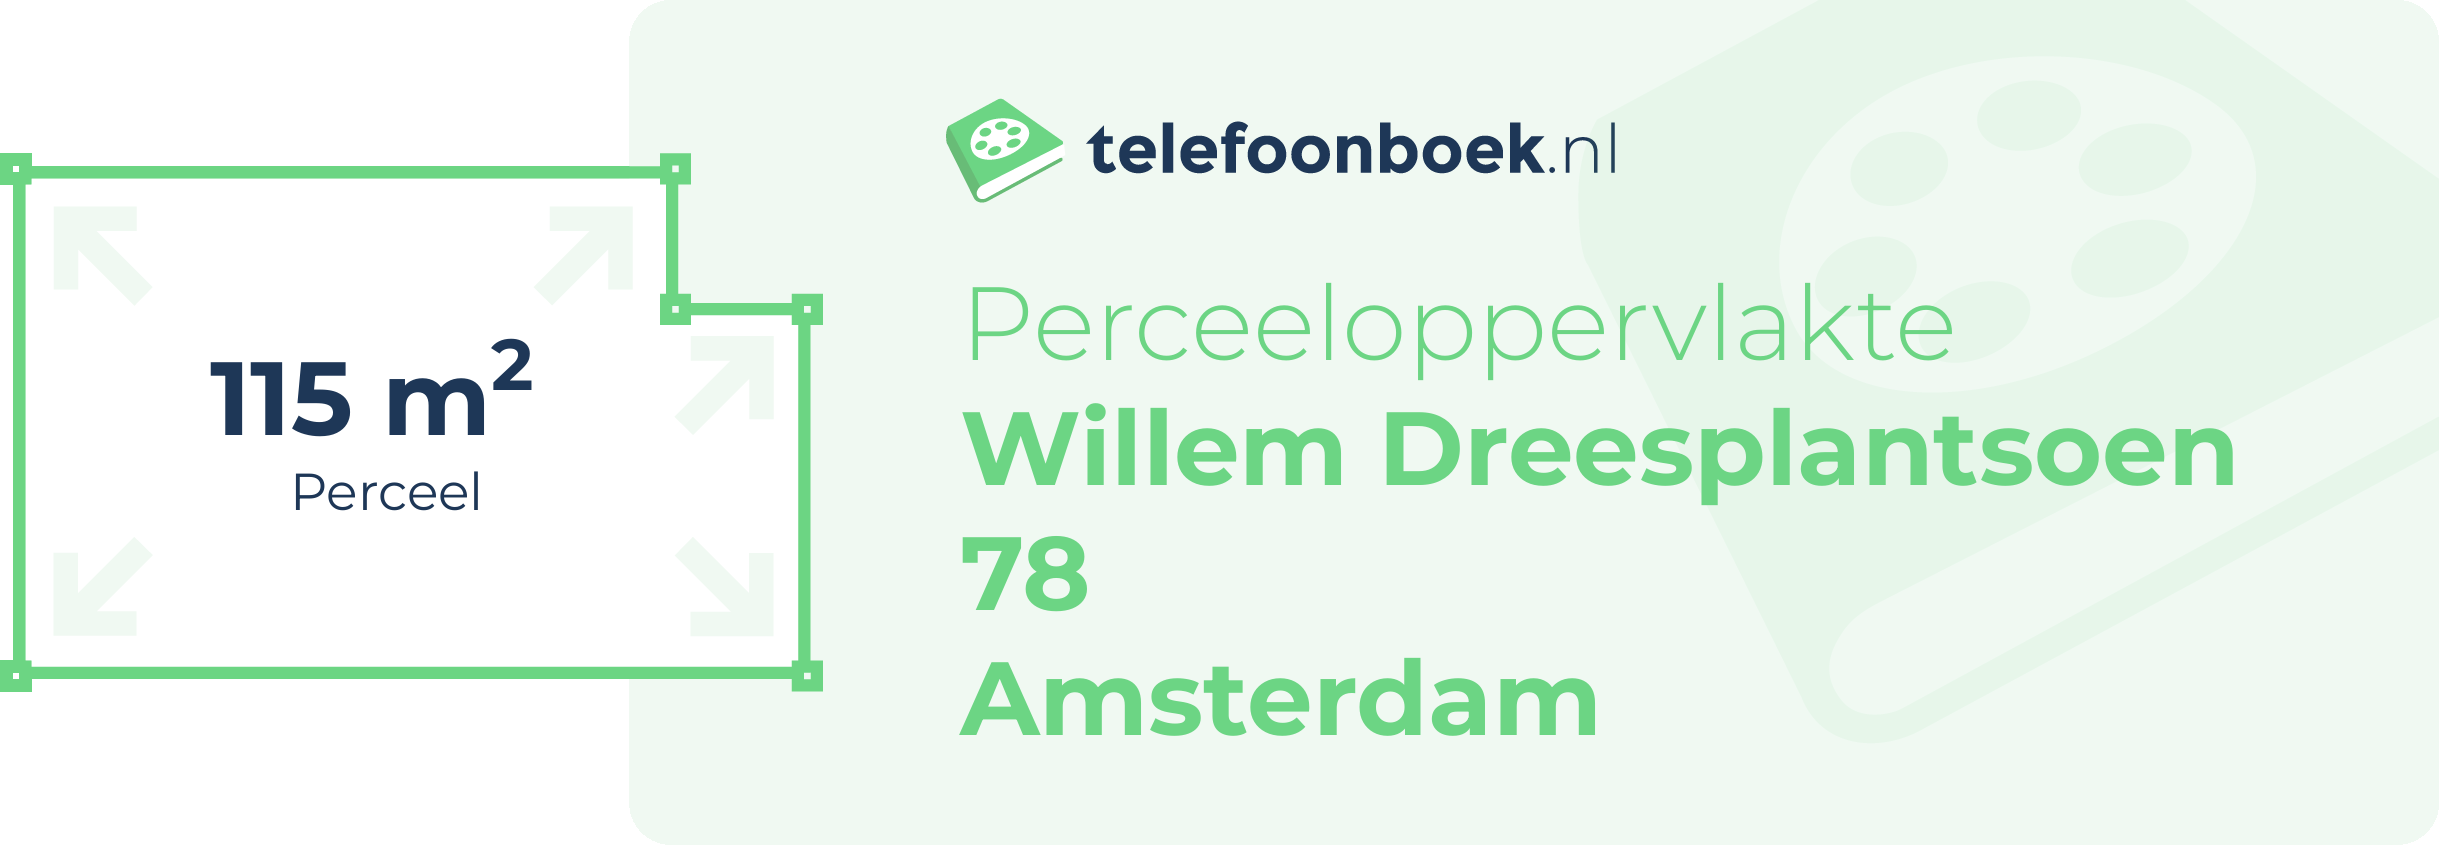 Perceeloppervlakte Willem Dreesplantsoen 78 Amsterdam